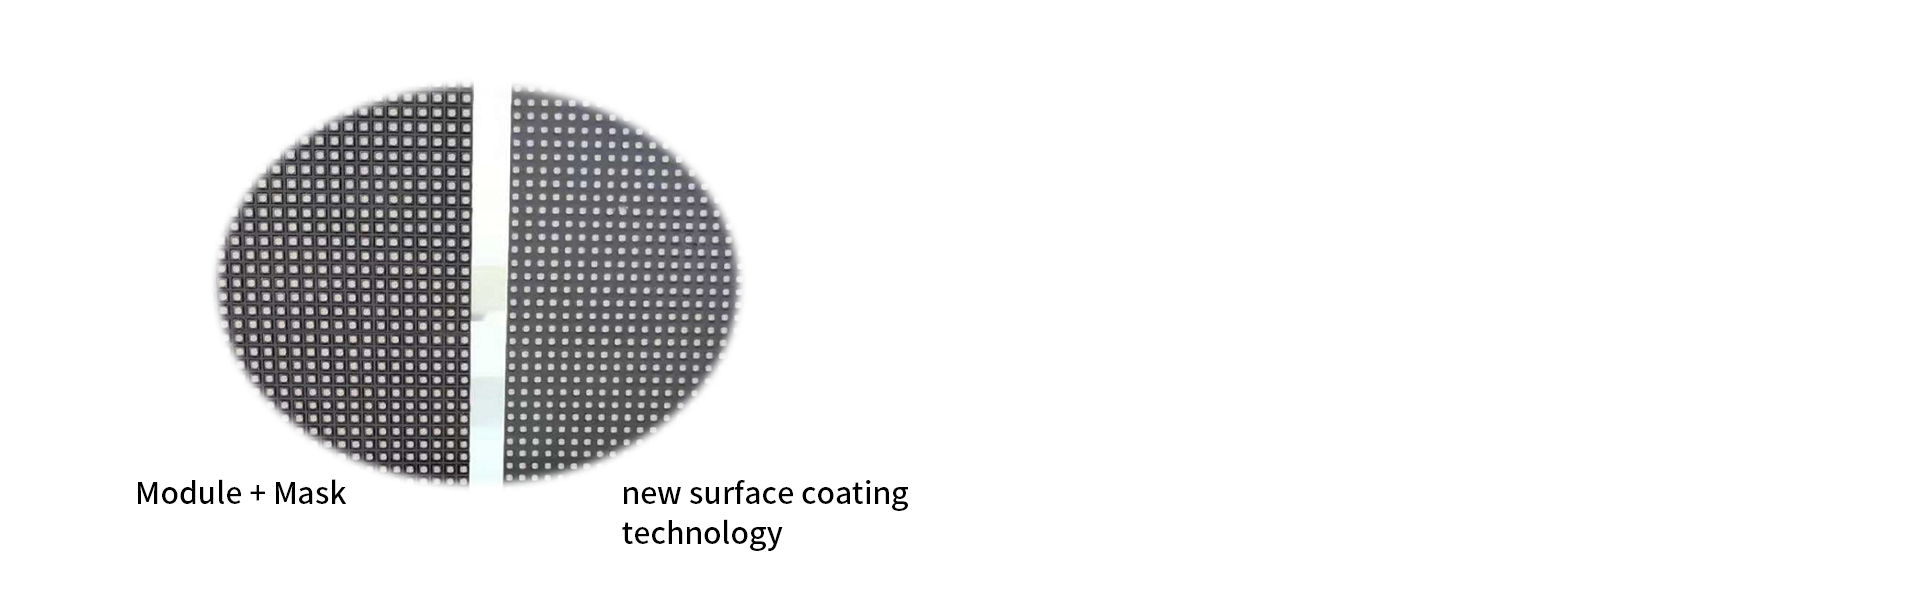 New surface coating technology